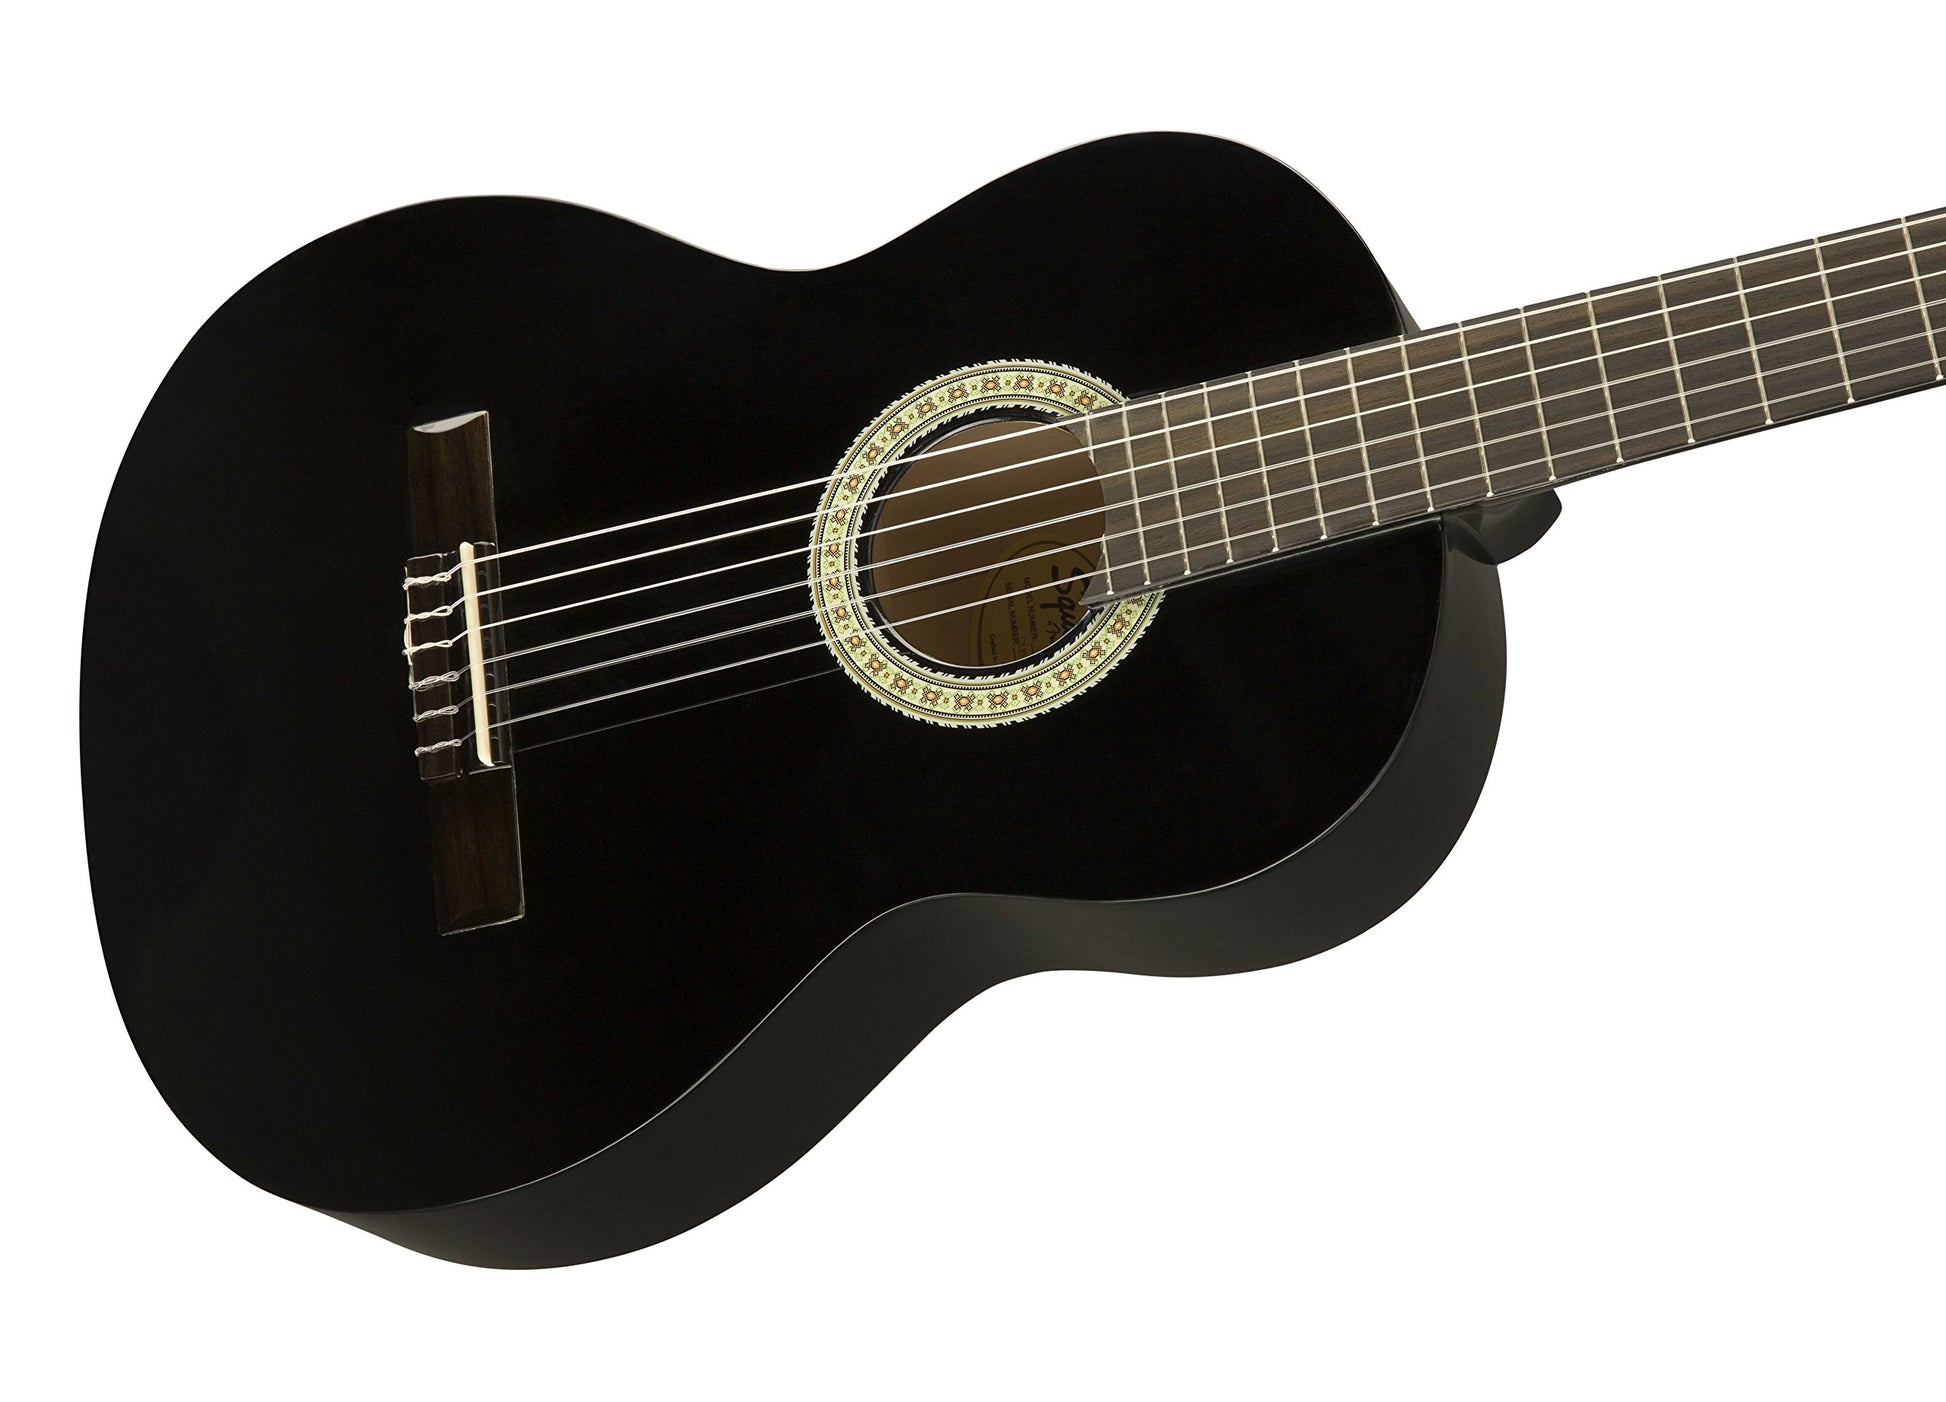 Fender Squier 0961090006 SA-150 Black Dreadnought Acoustic Guitar - Reco Music Malaysia